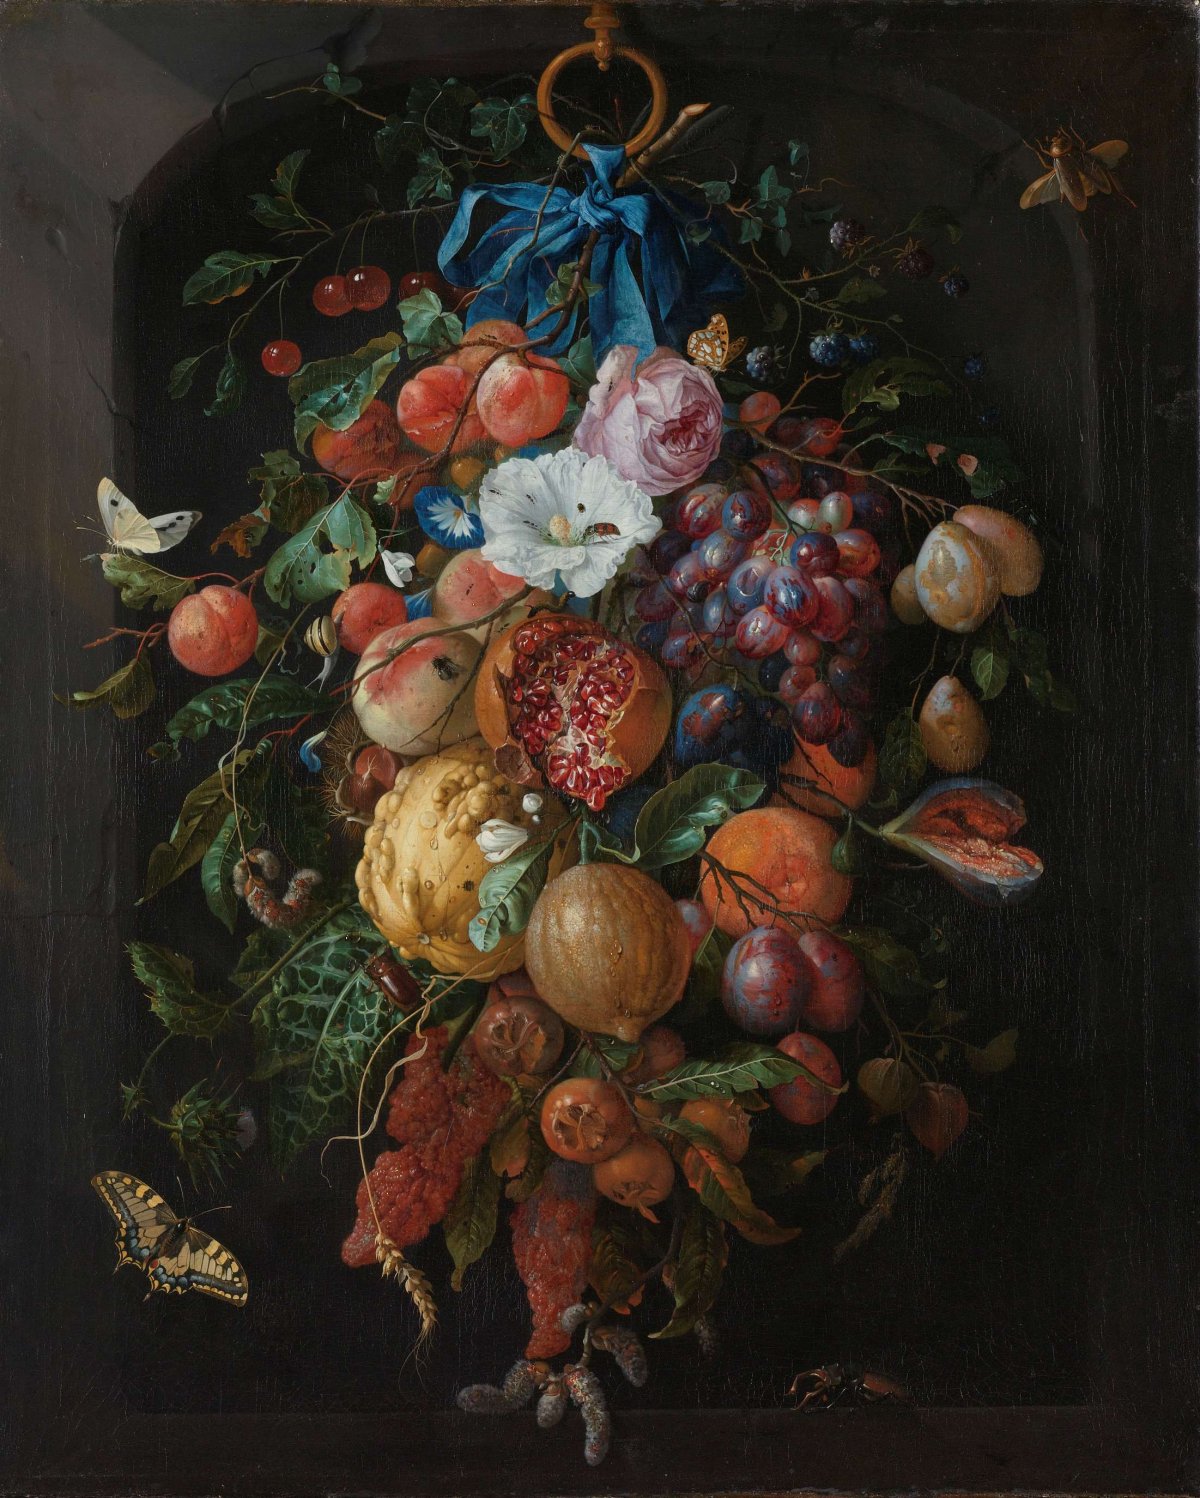 Festoon of Fruit and Flowers, Jan Davidsz. de Heem, 1660 - 1670